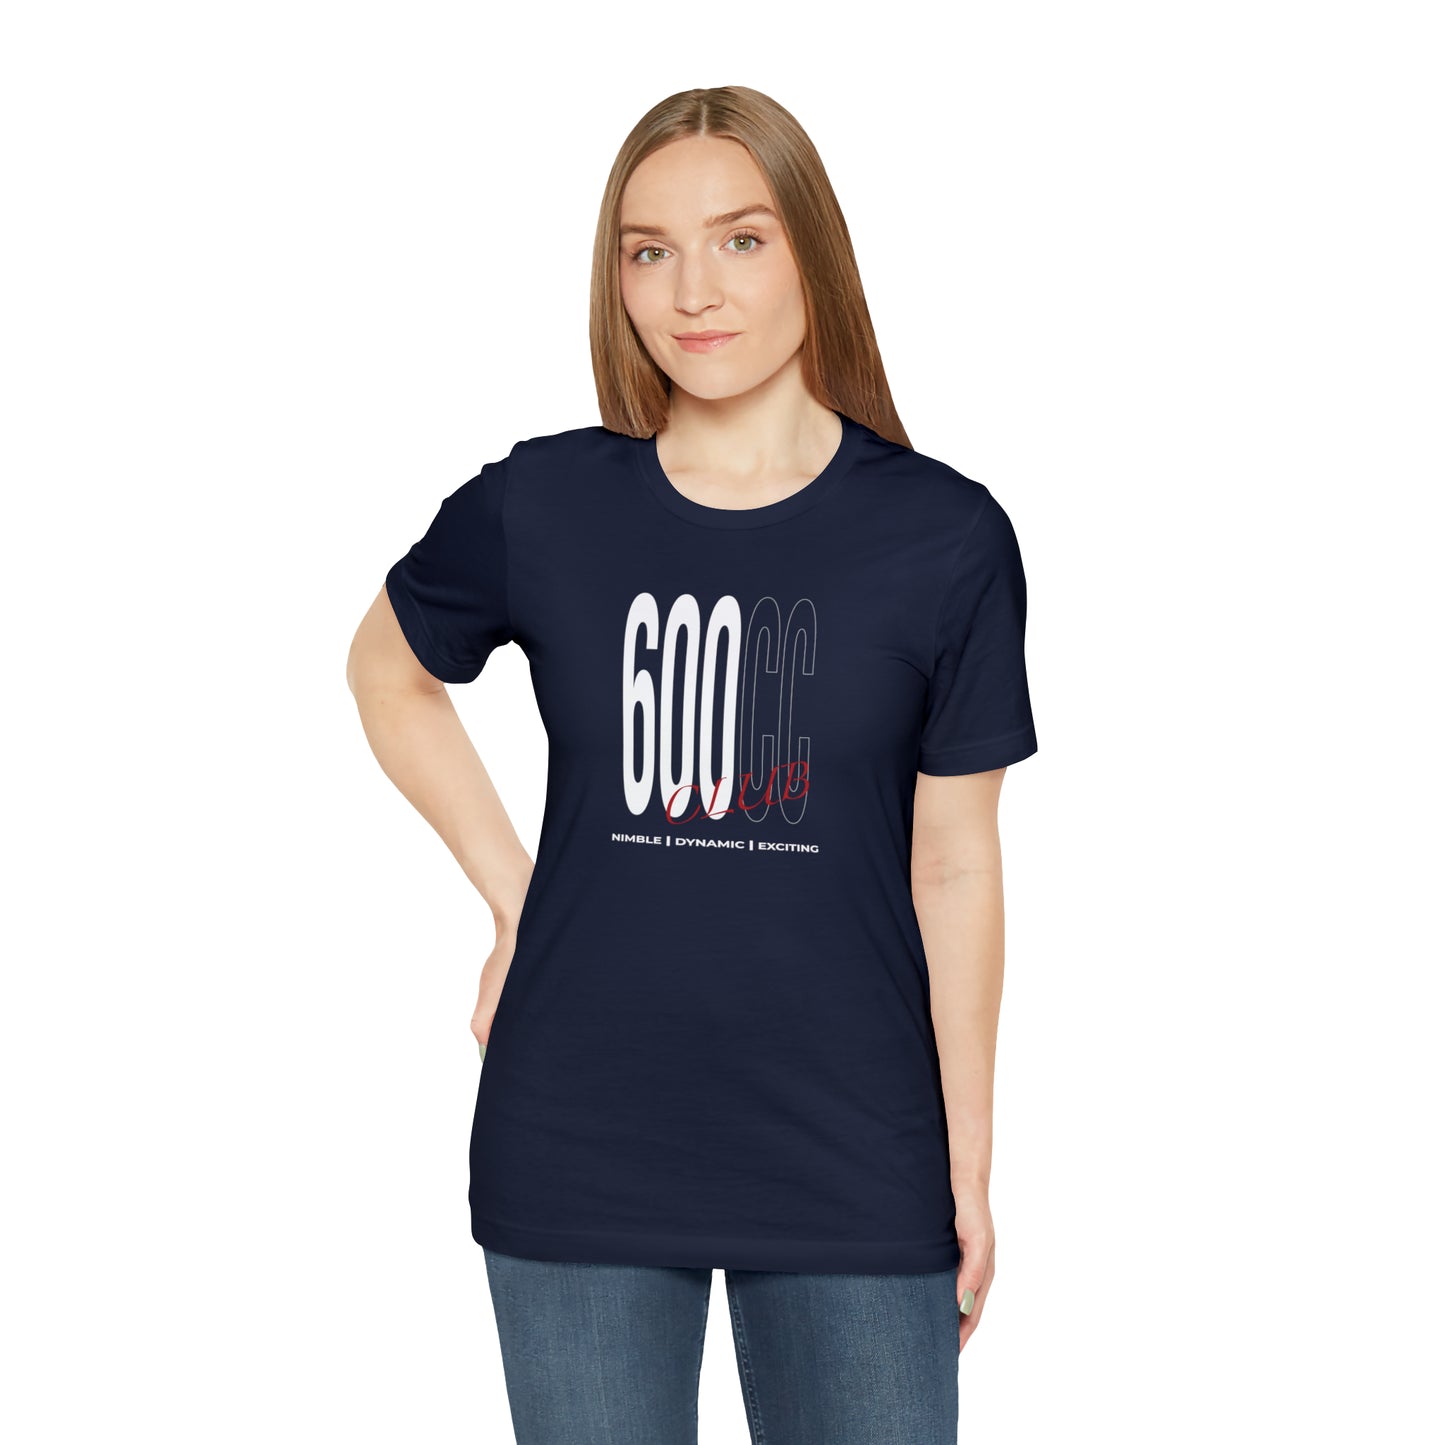 Club 600cc | T-Shirt